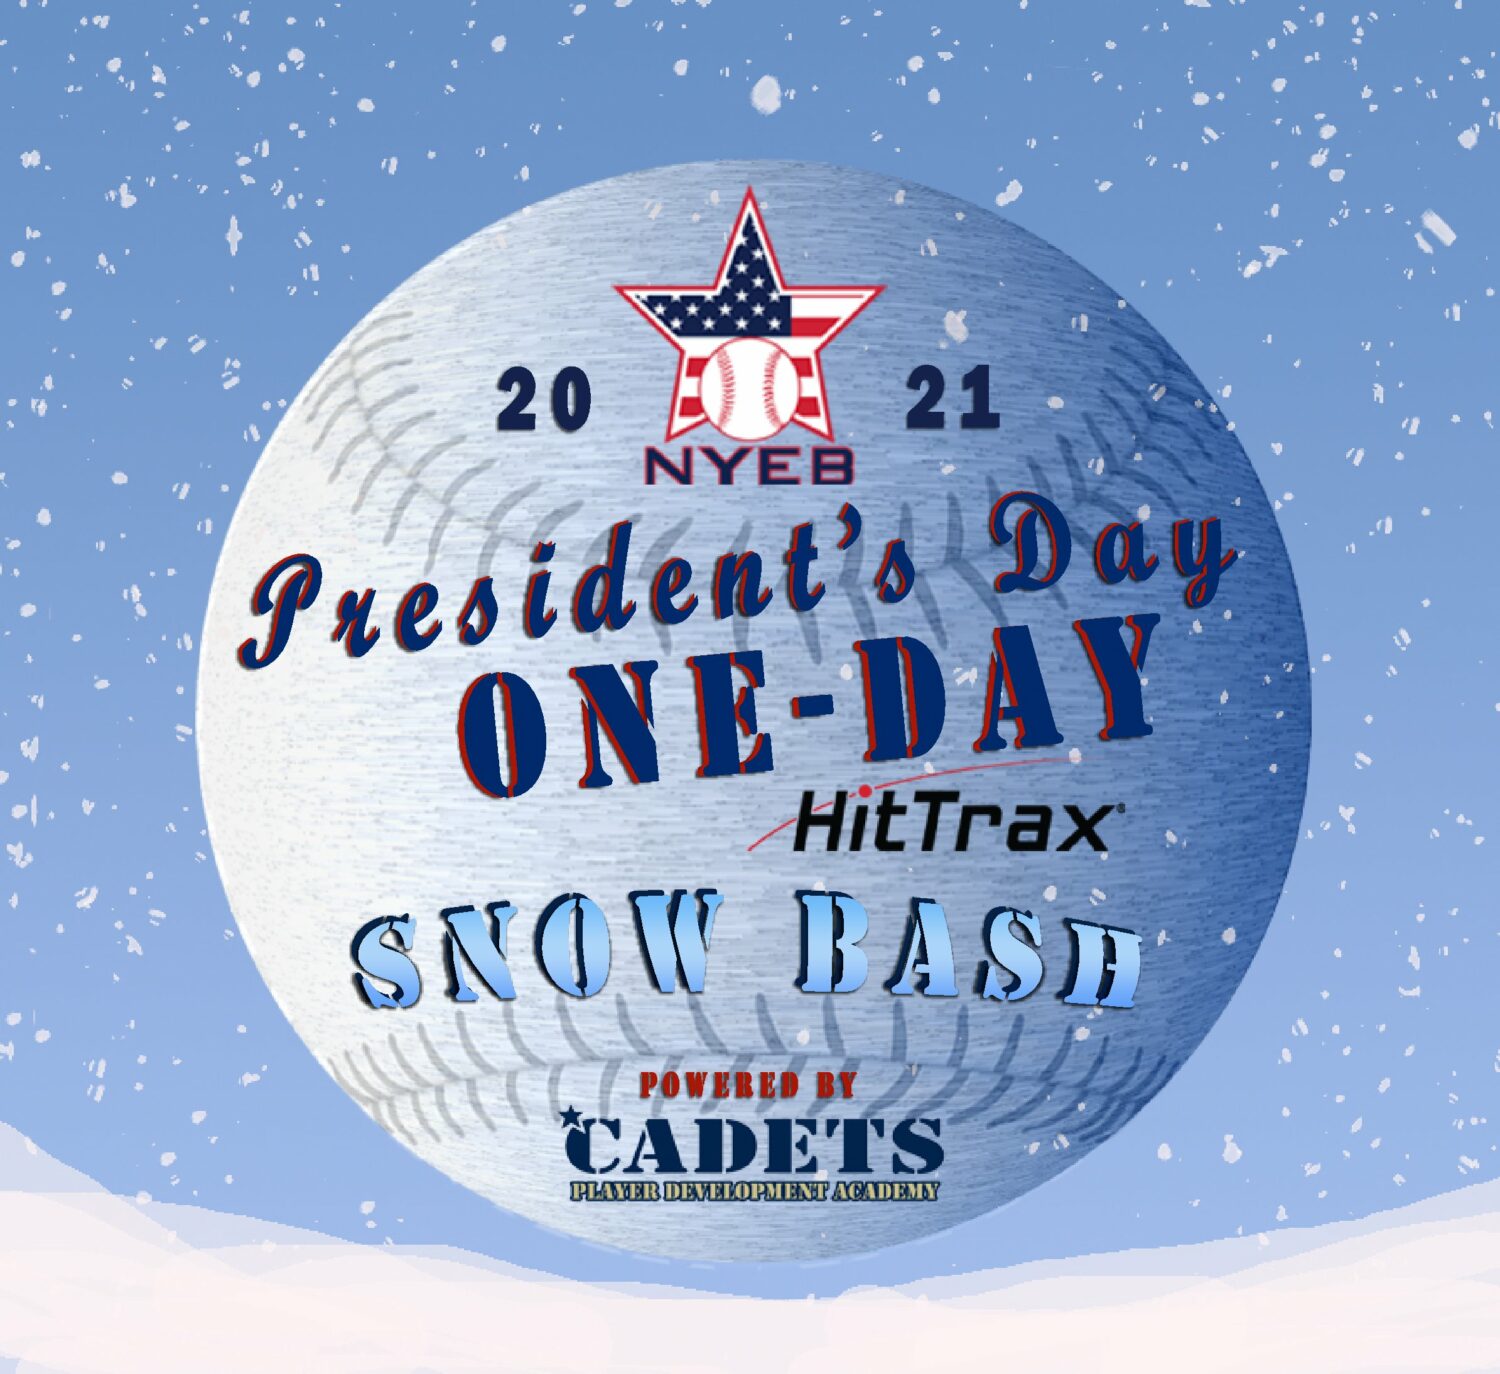 February 2021, 2021 NYEB Presidents Day OneDay HitTrax Snow Bash